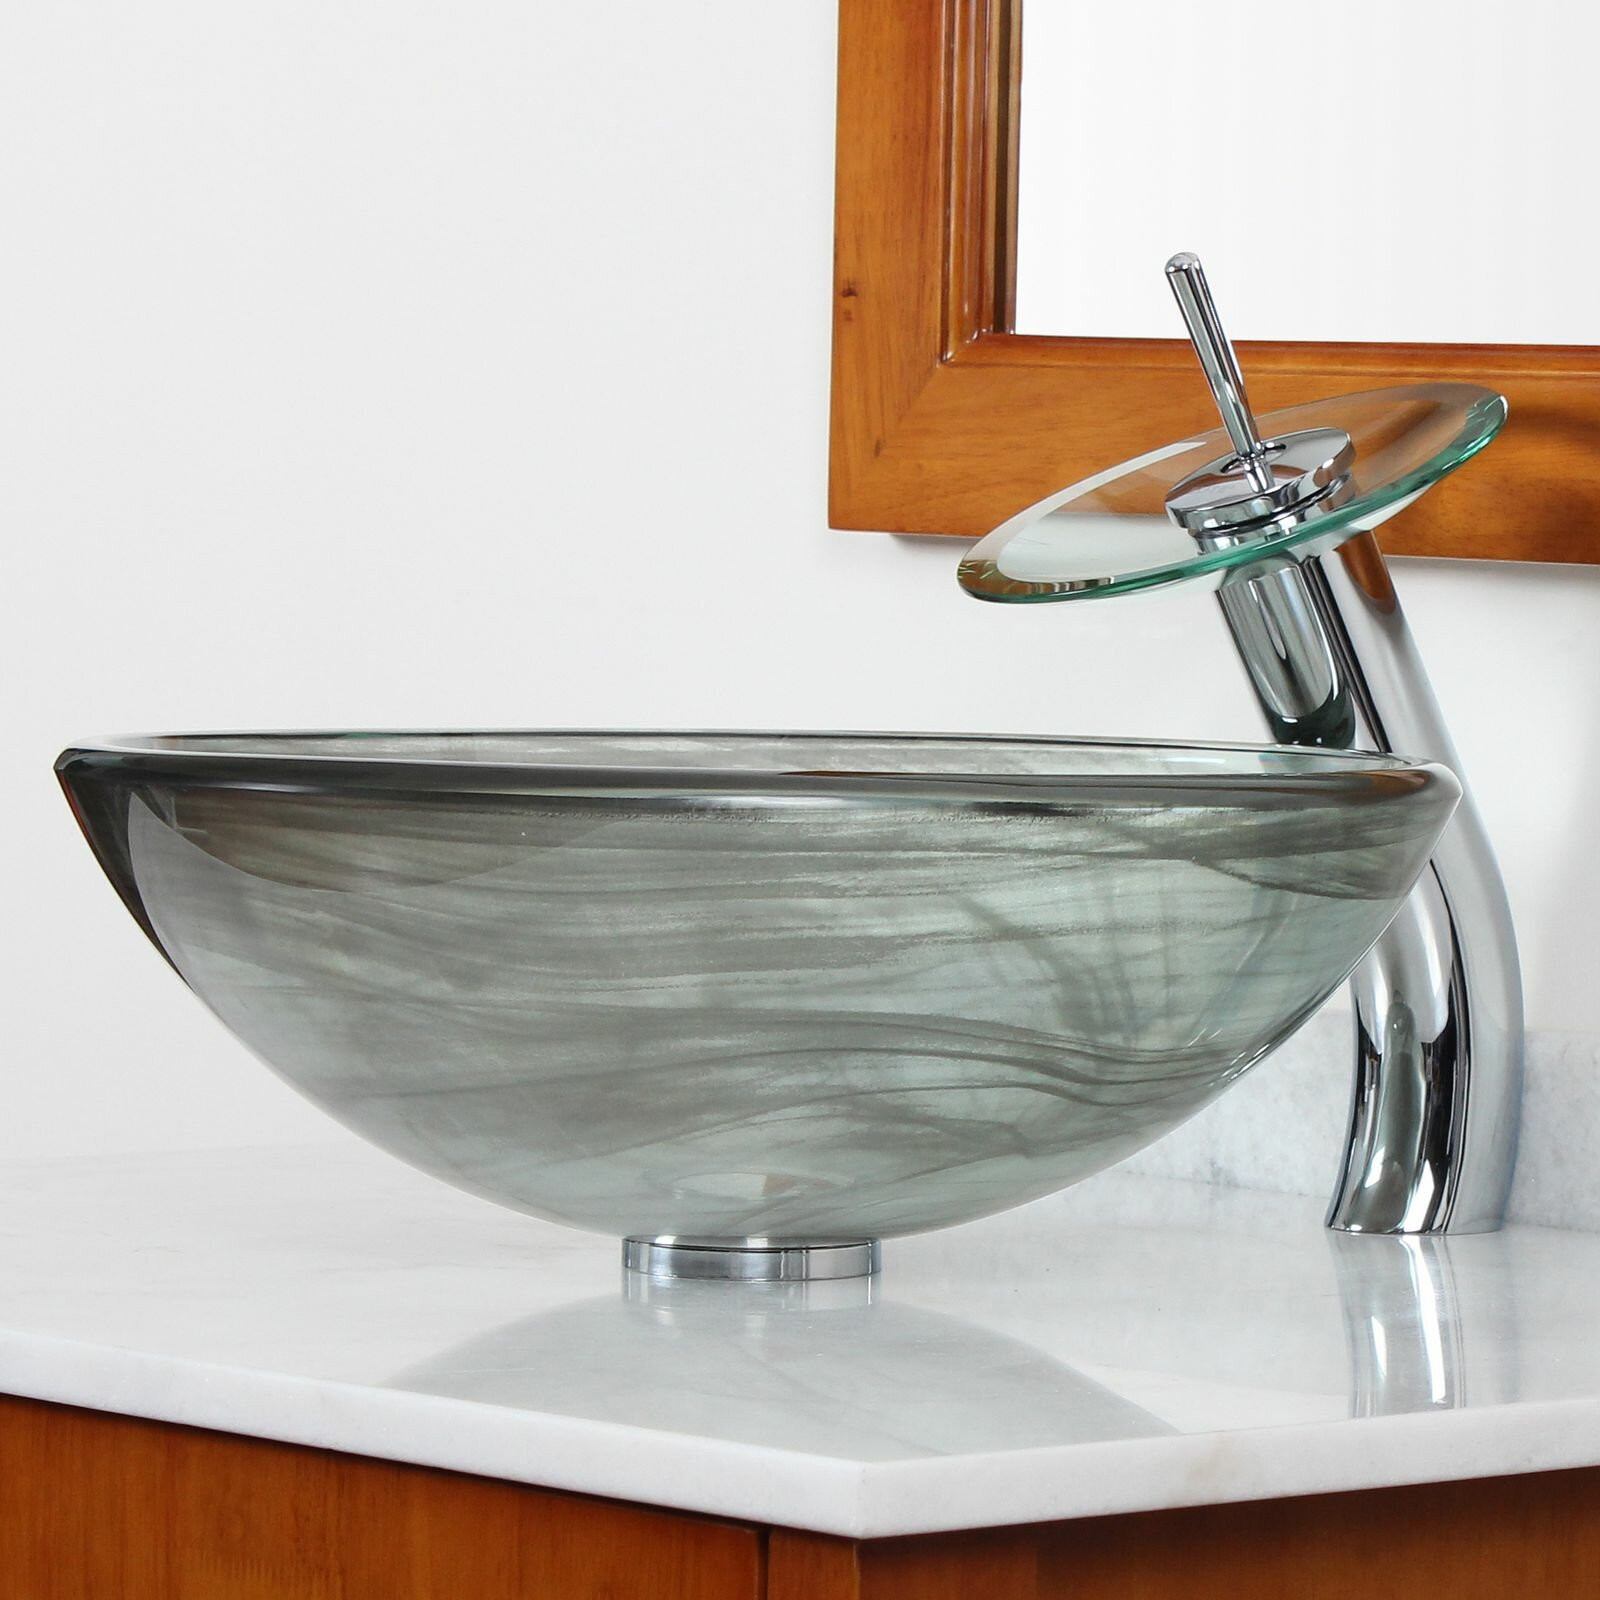 Bathroom Sink Bowls
 Elite Double Layered Tempered Glass Bowl Vessel Bathroom